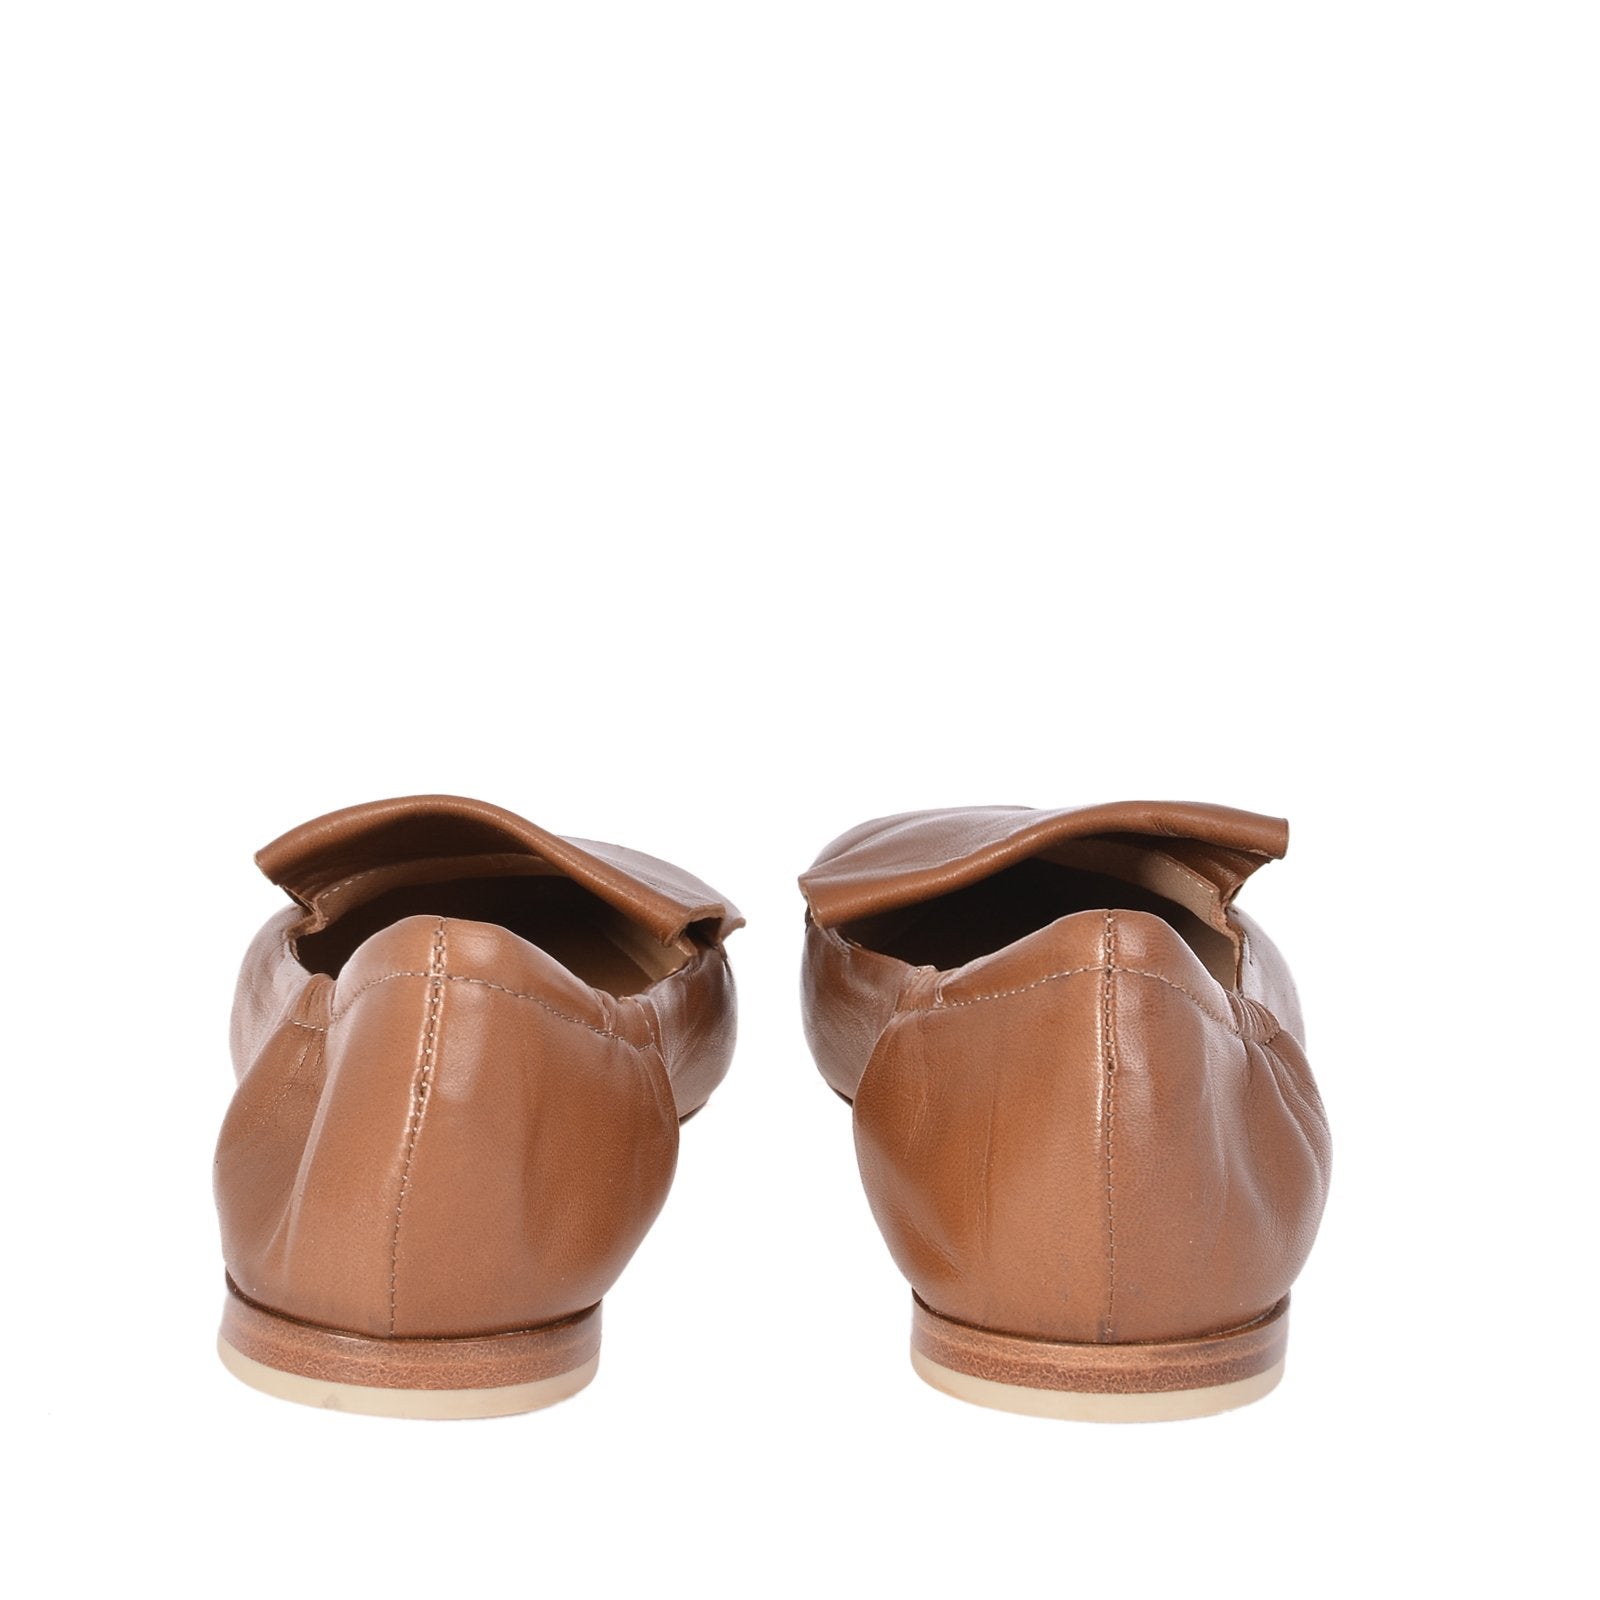 Grace Caramel Leather Loafers Flats 1744B-CARAMEL - 5